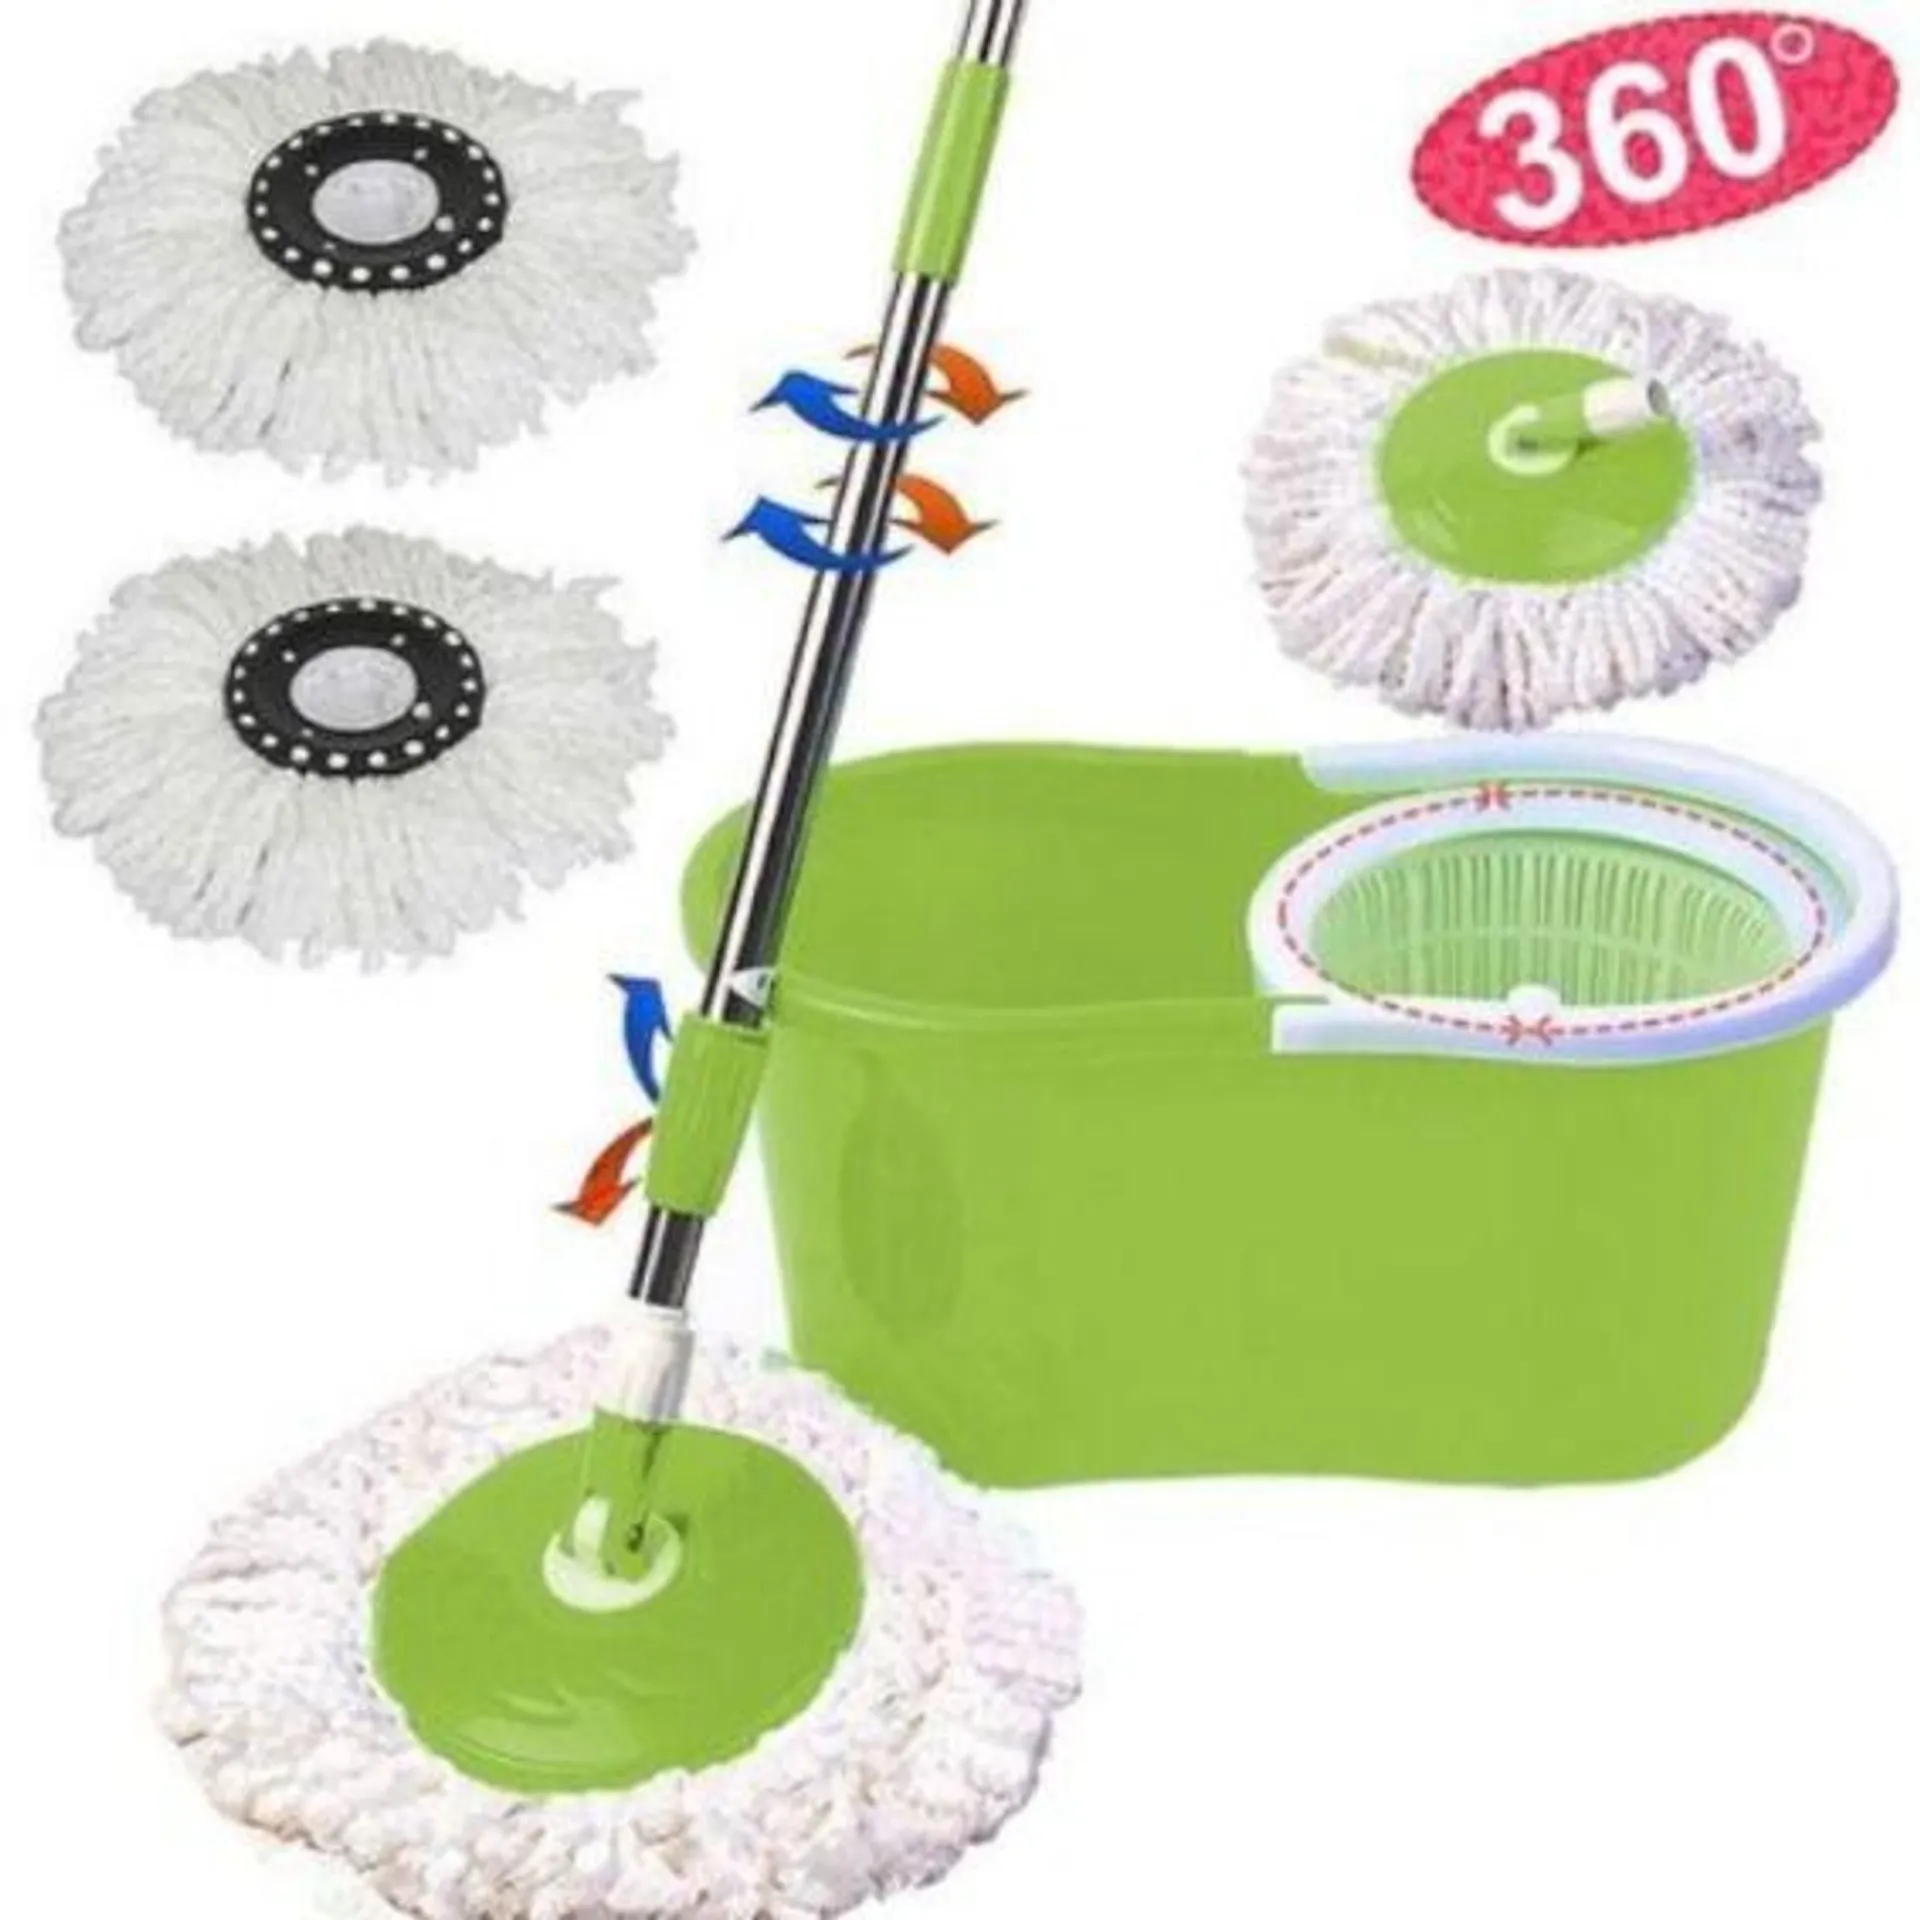 Rotating 360° Magic Spin Mop And Plastic Bucket Set-Green - Green